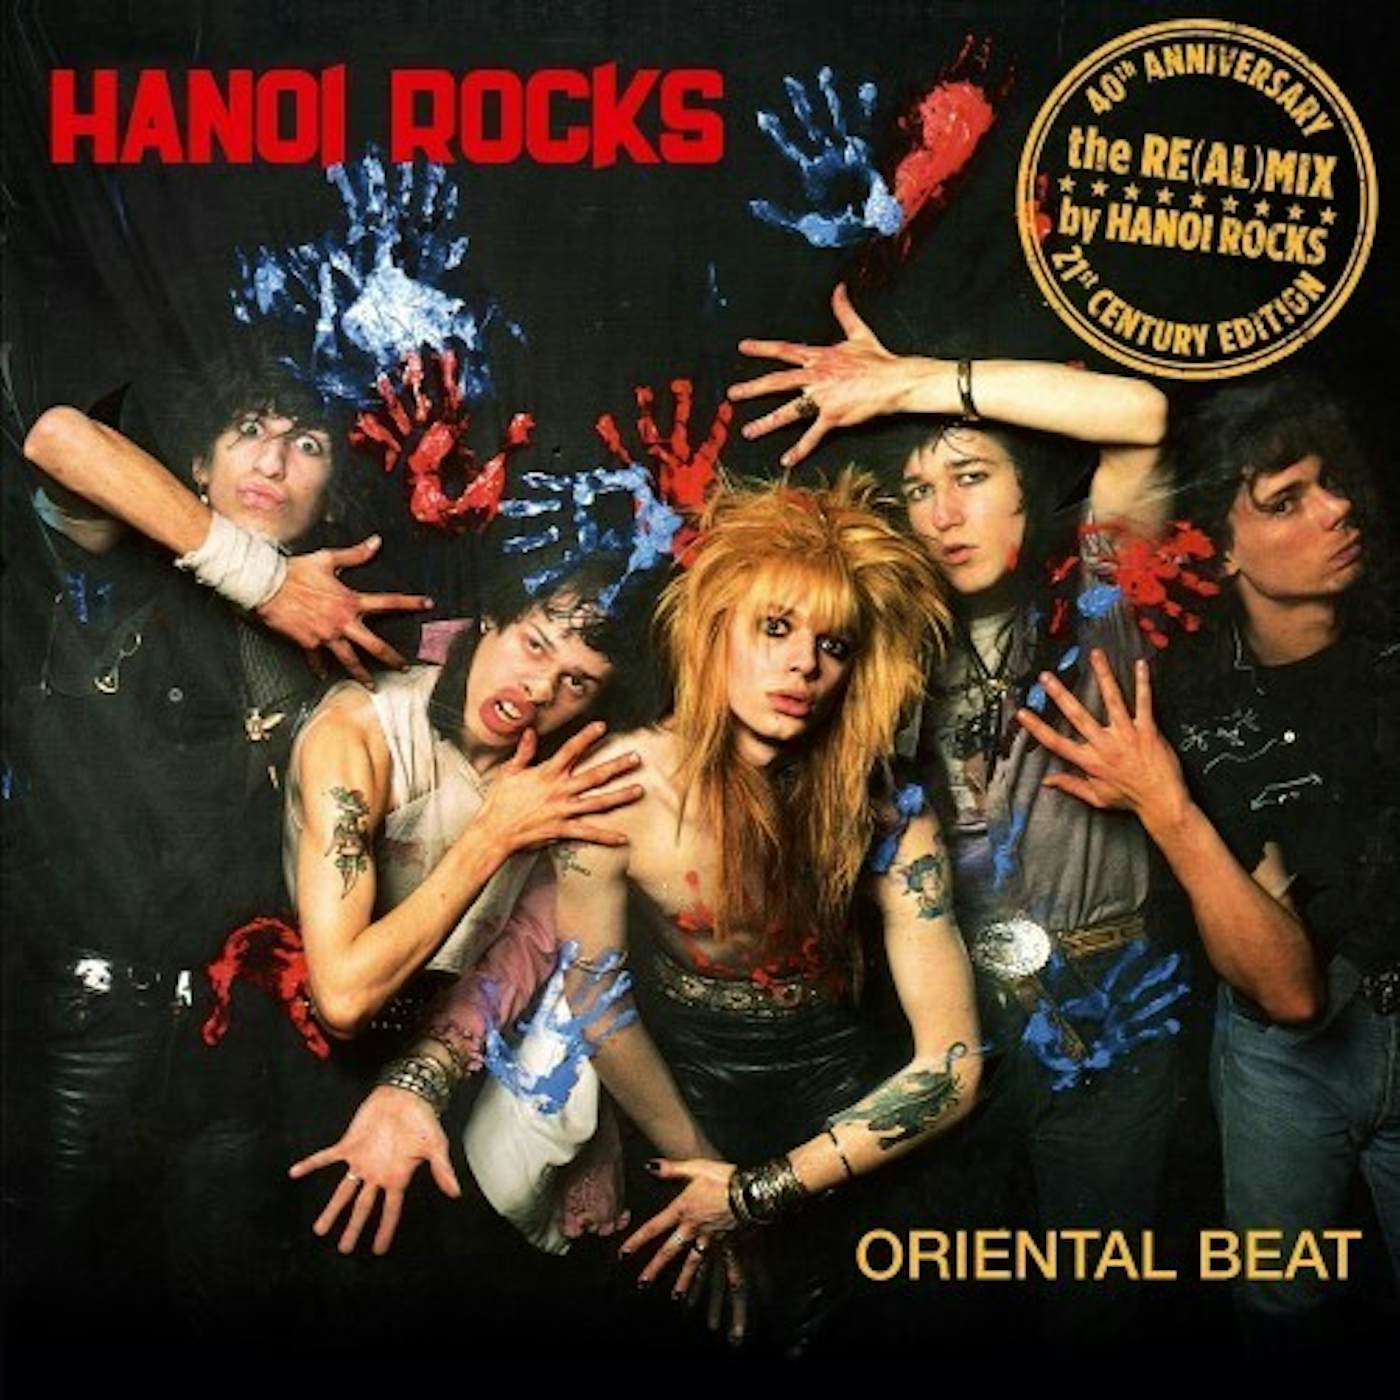 Hanoi Rocks ORIENTAL BEAT - 40TH ANNIVERSARY RE(AL)MIX CD